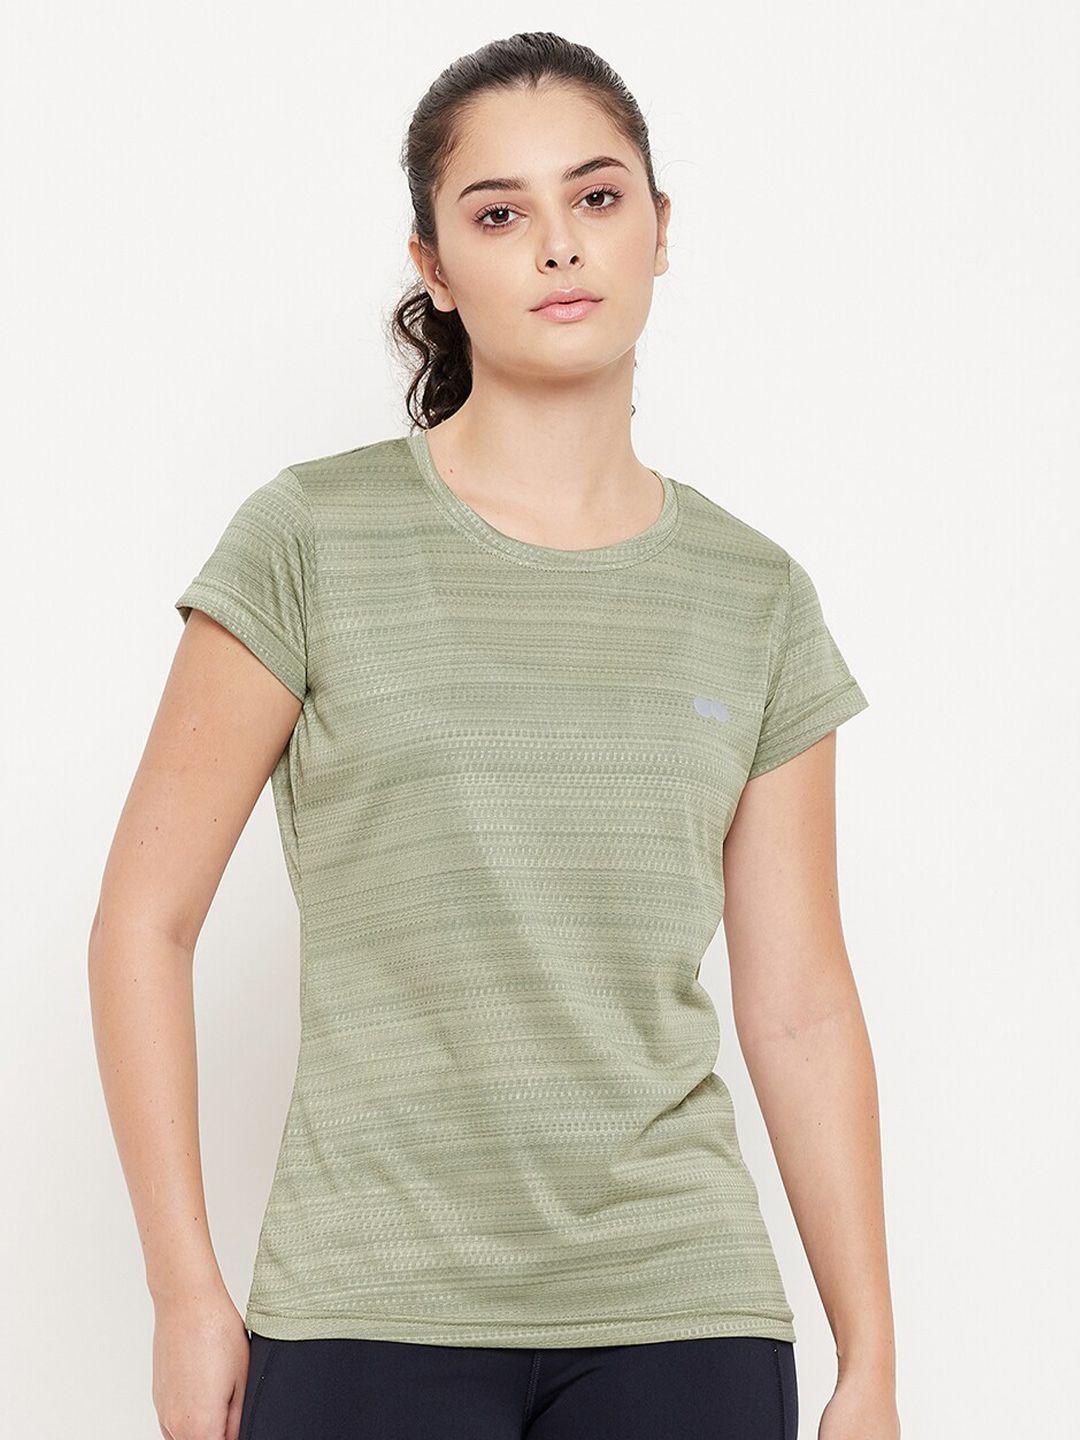 clovia women olive green comfort-fit active t-shirt